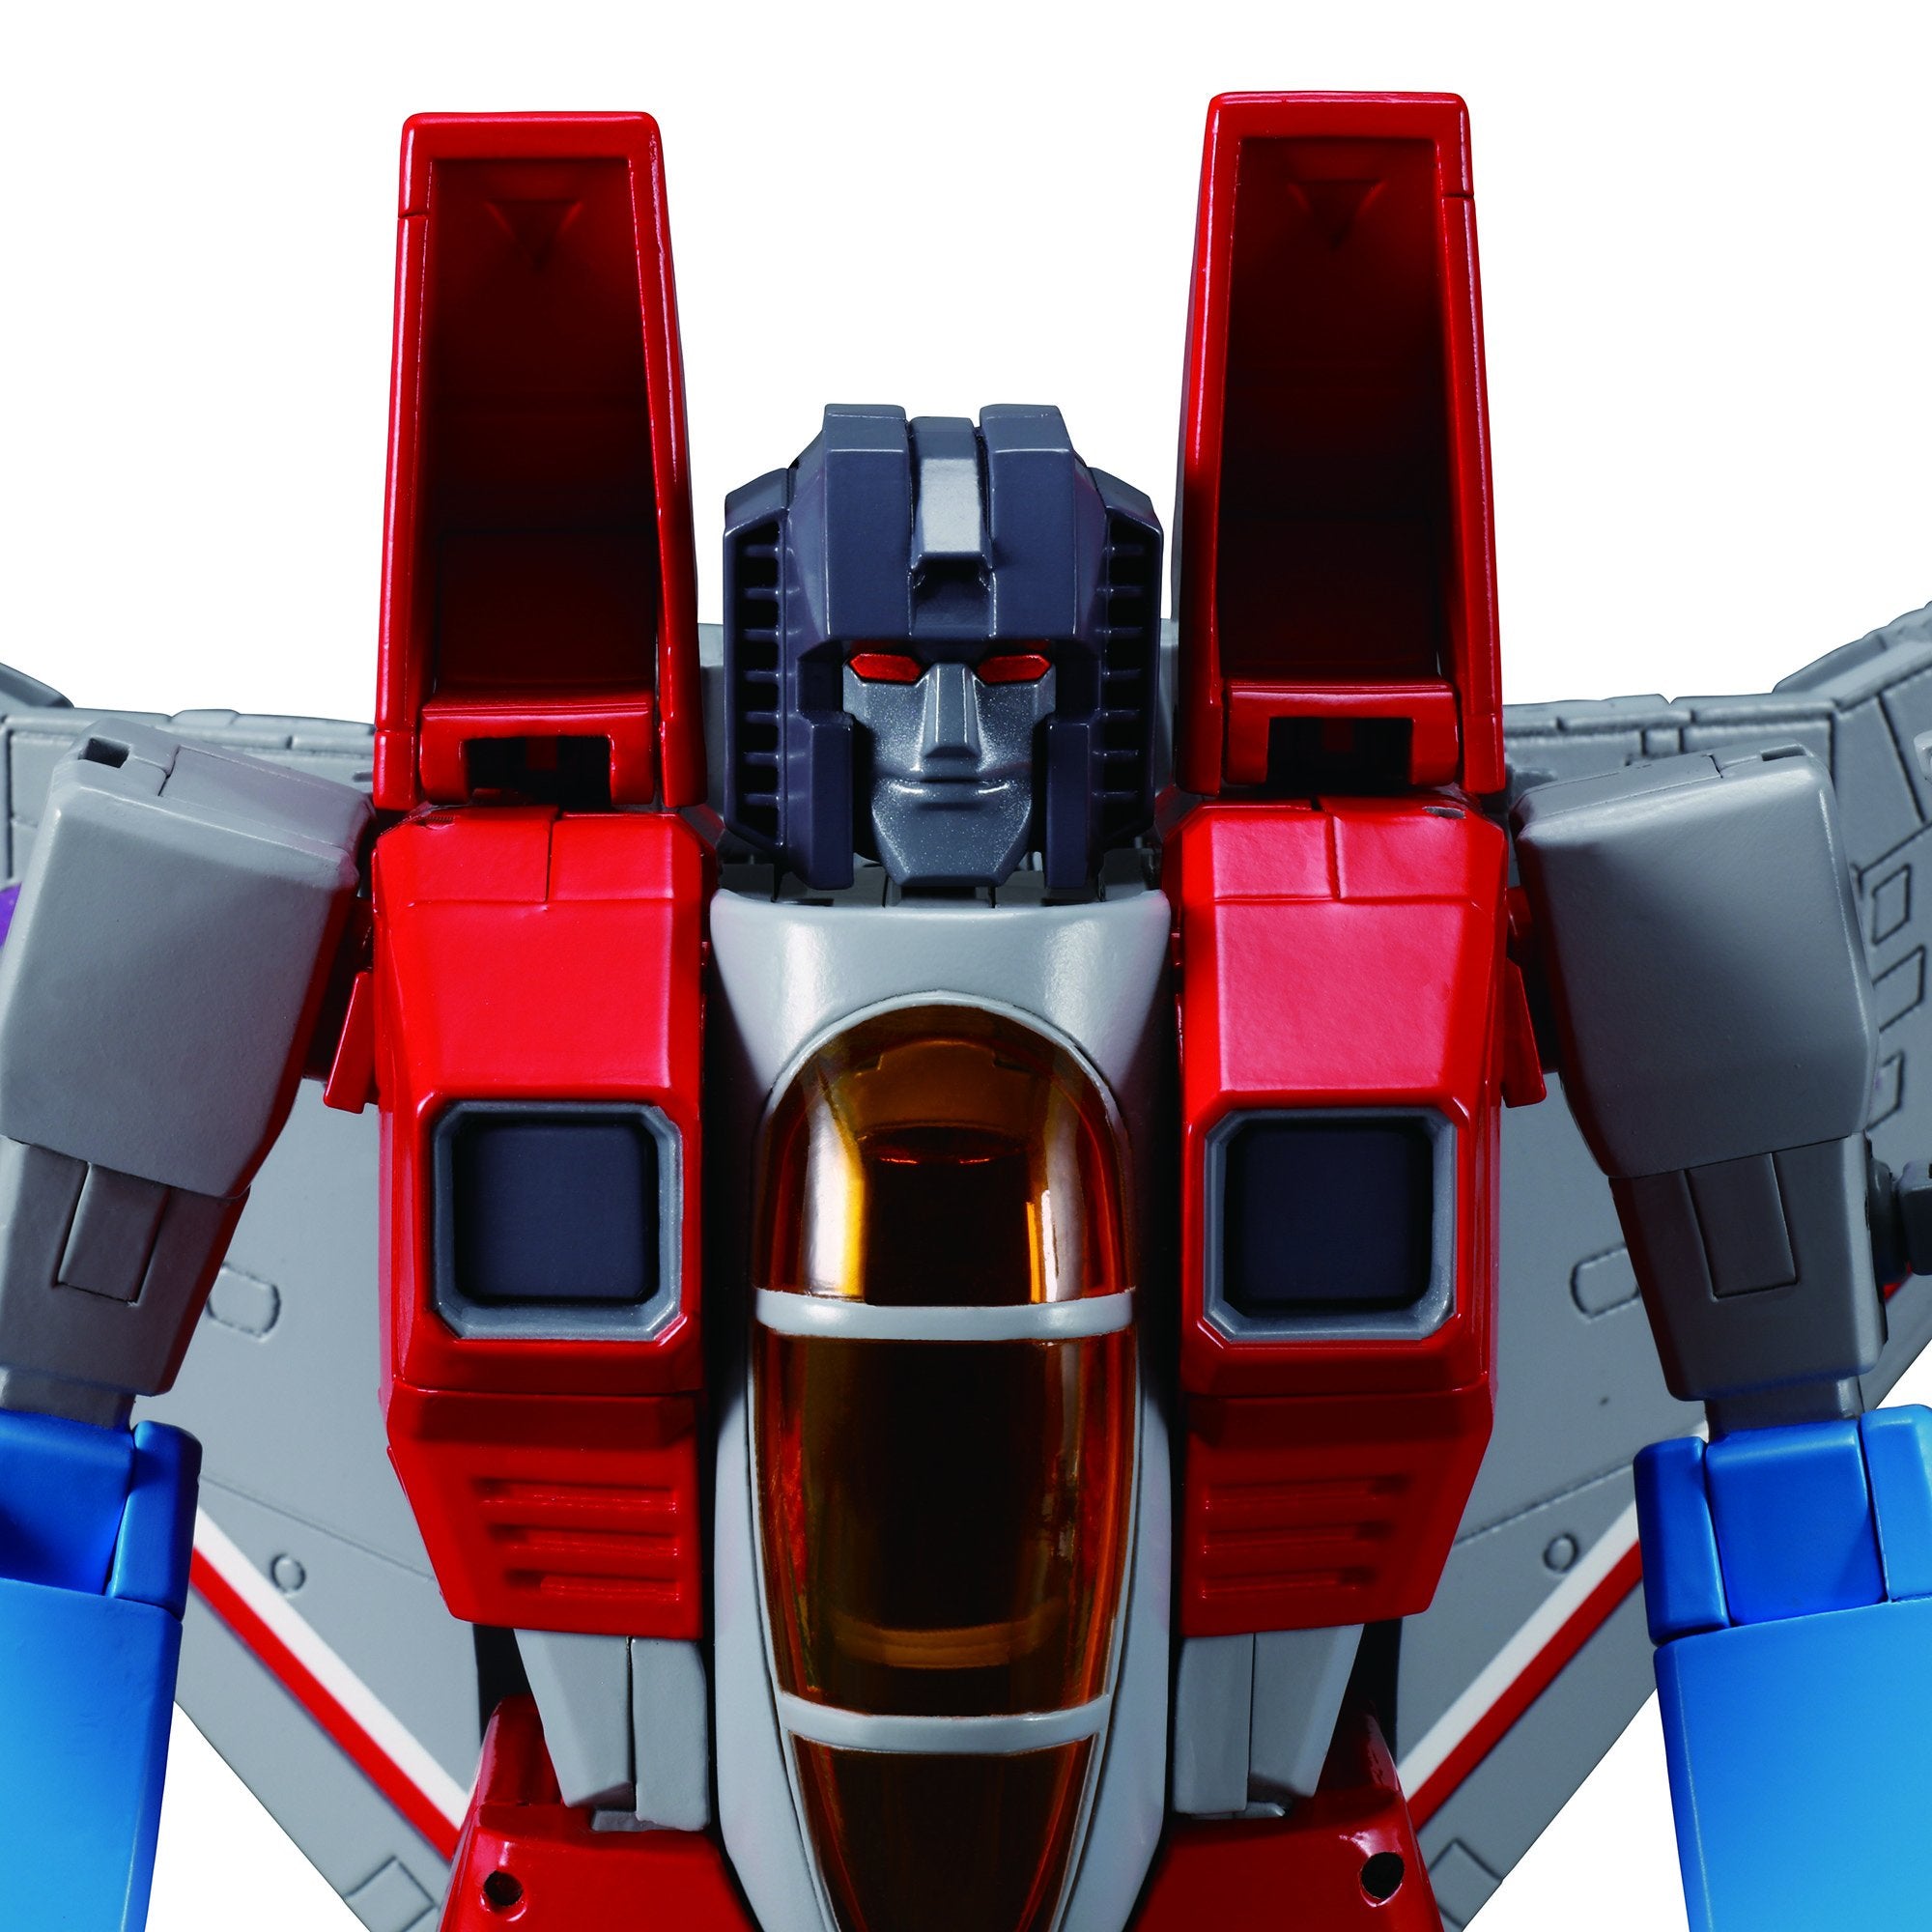 TakaraTomy - Transformers Masterpiece - MP-52 - Starscream (Ver. 2.0) - Marvelous Toys